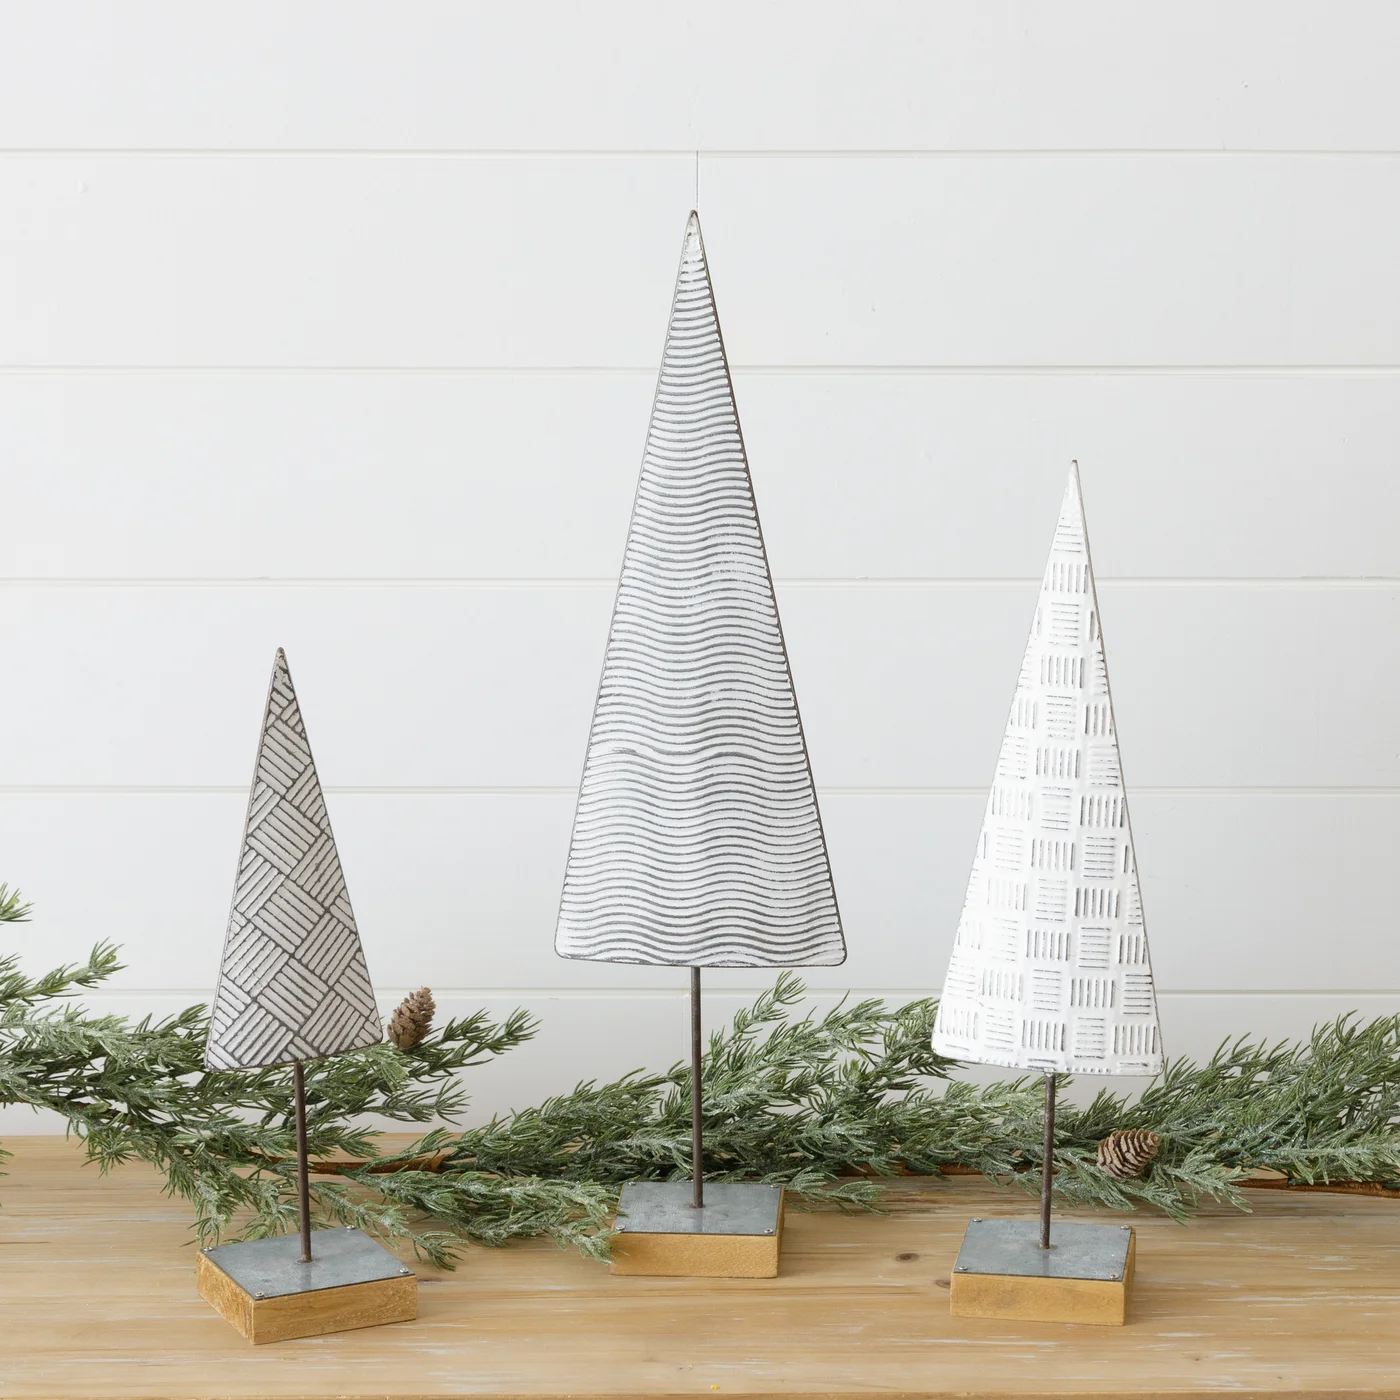 Set of 3 Abstract Metal Rustic Christmas Trees